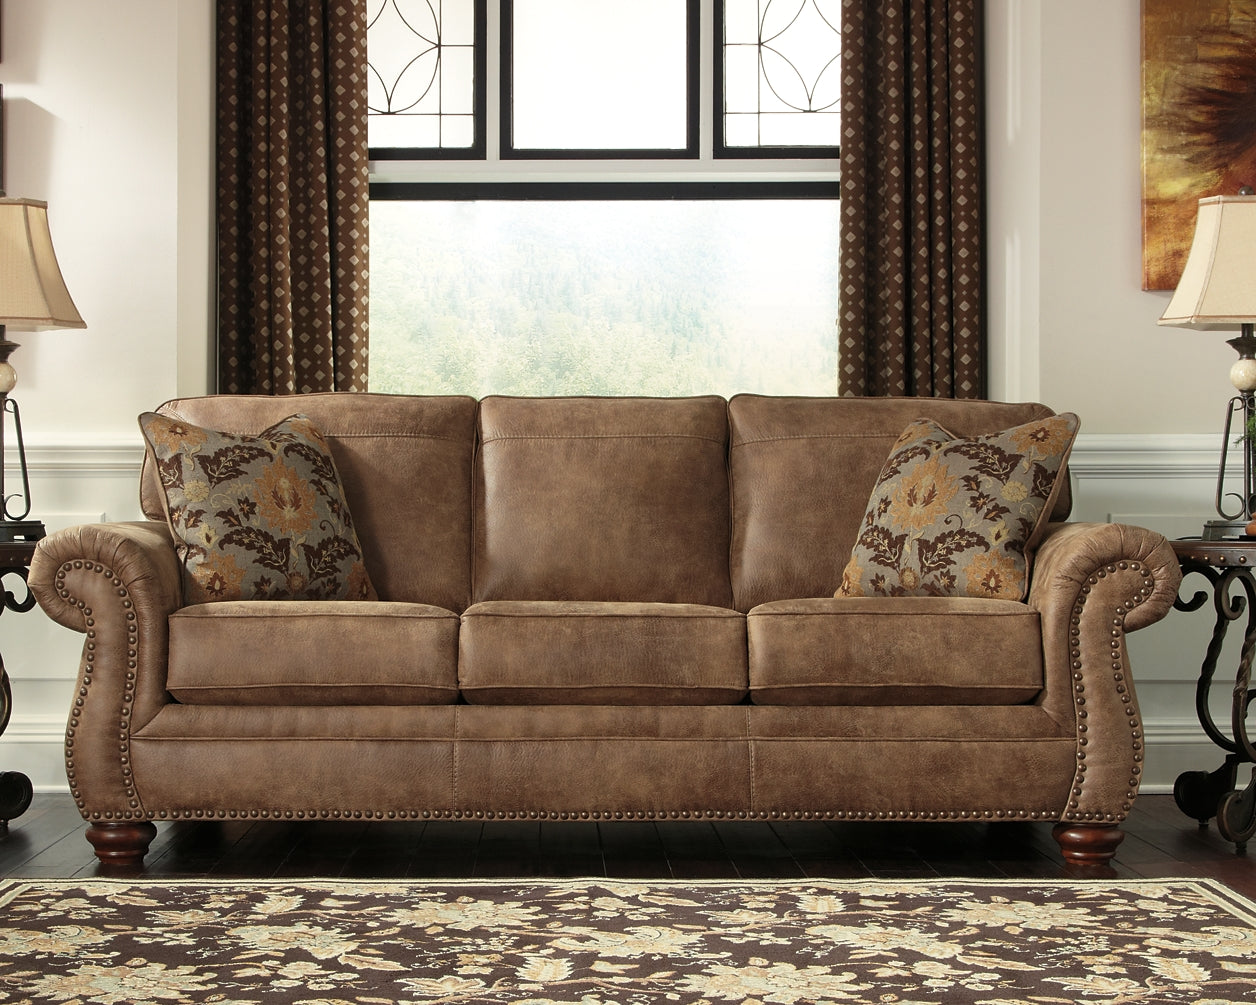 Larkinhurst Sofa at Cloud 9 Mattress & Furniture furniture, home furnishing, home decor